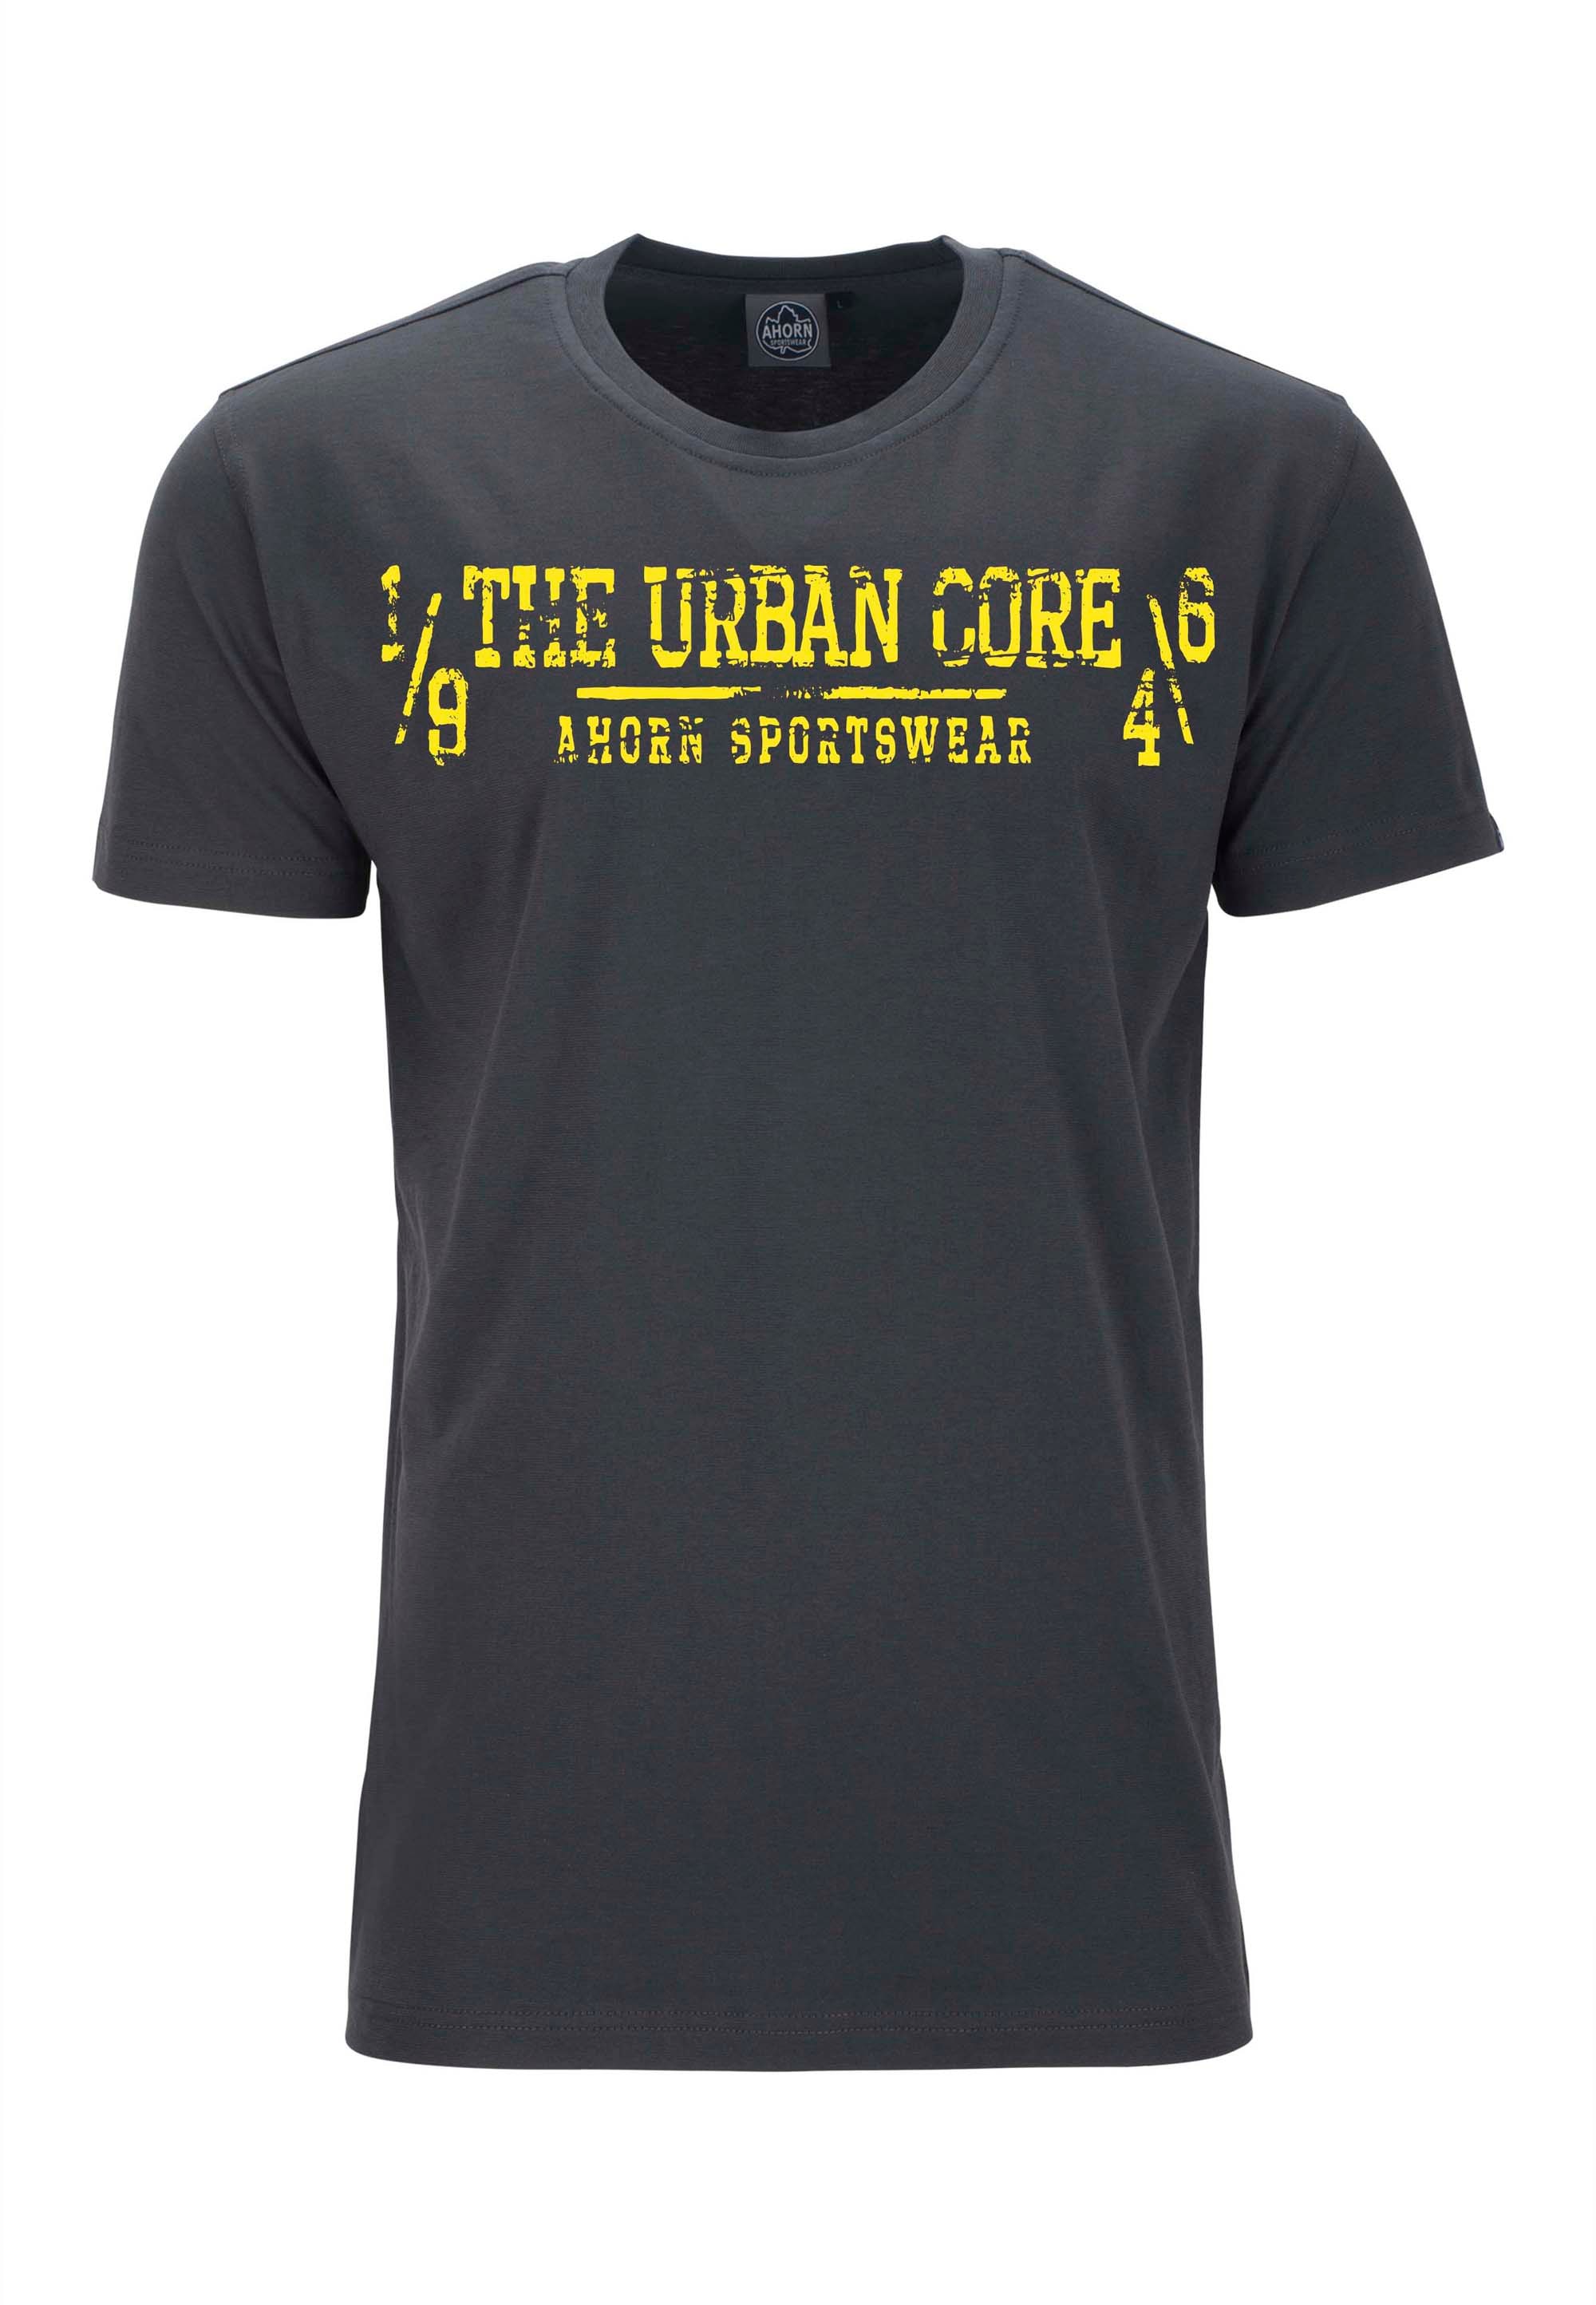 AHORN SPORTSWEAR T-Shirt »URBAN CORE«, mit lässigem Print